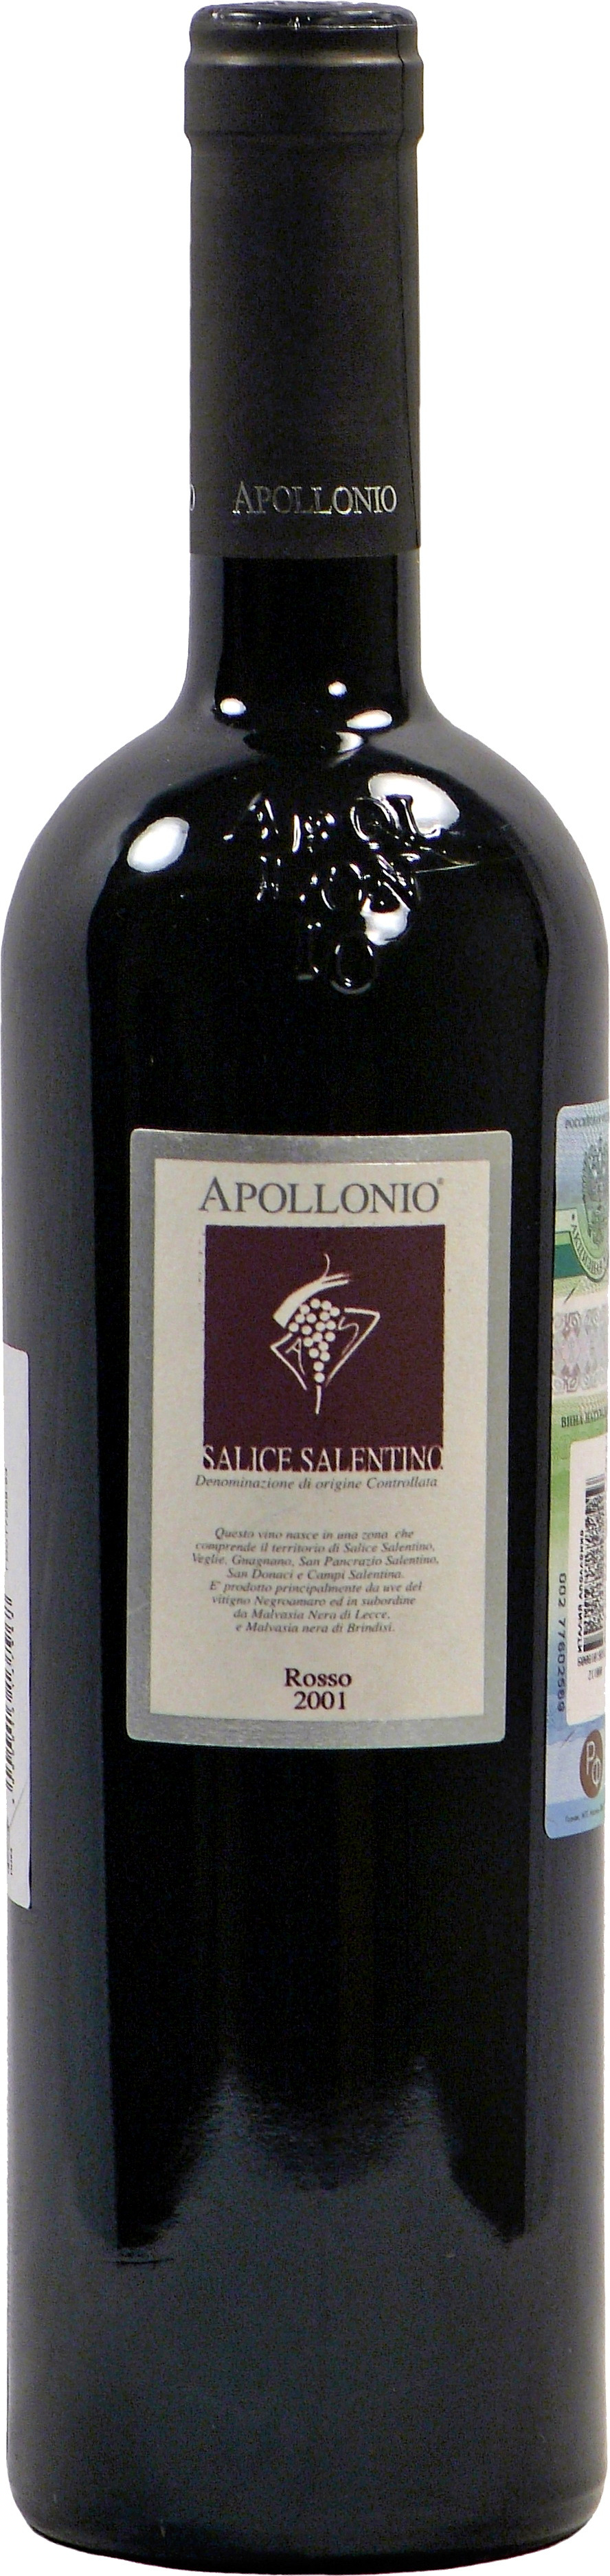 Аполлонио Саличе Салентино 2007 DOC